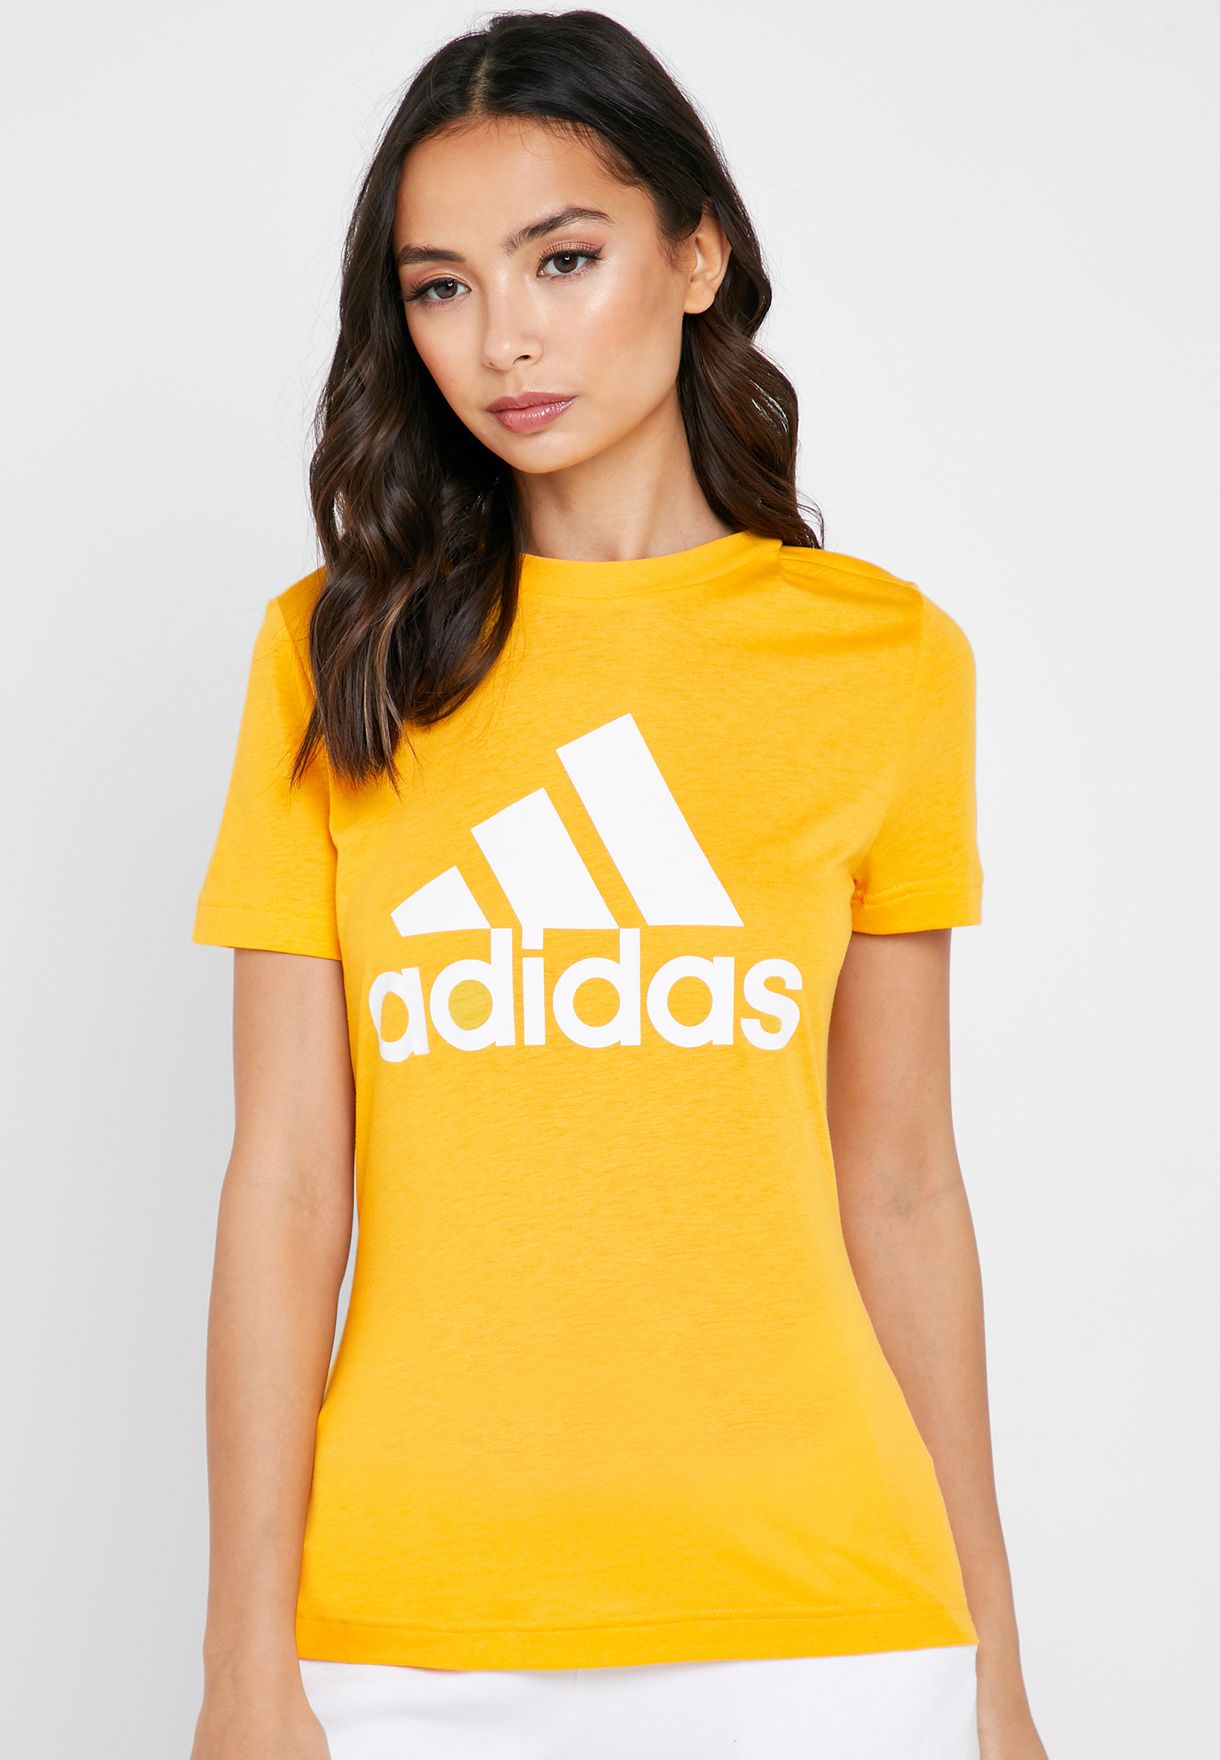 womens yellow adidas t shirt